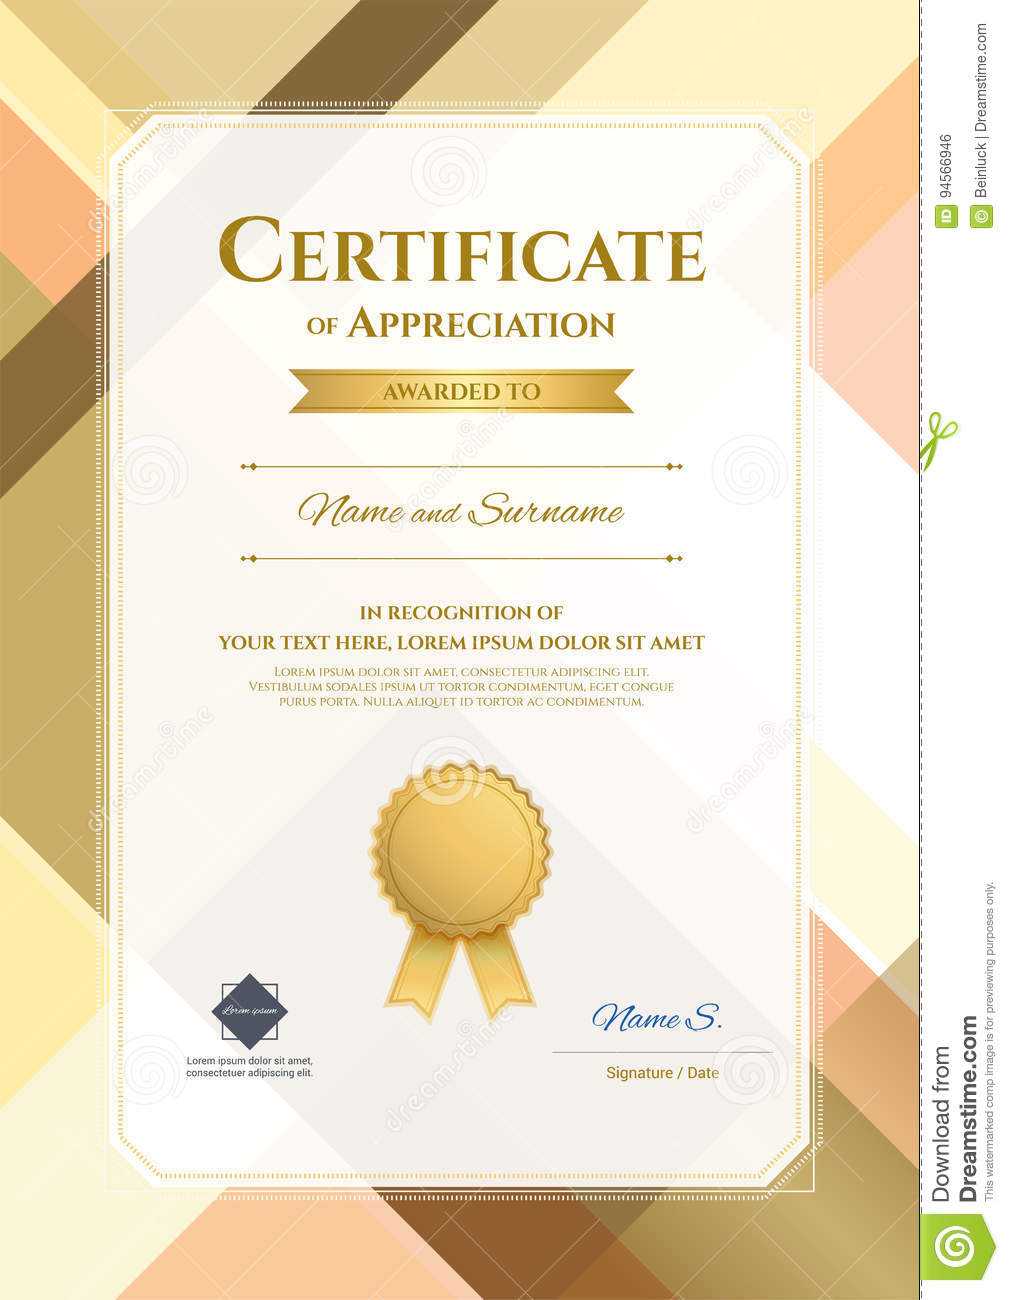 Portrait Modern Certificate Of Appreciation Template With With Walking Certificate Templates